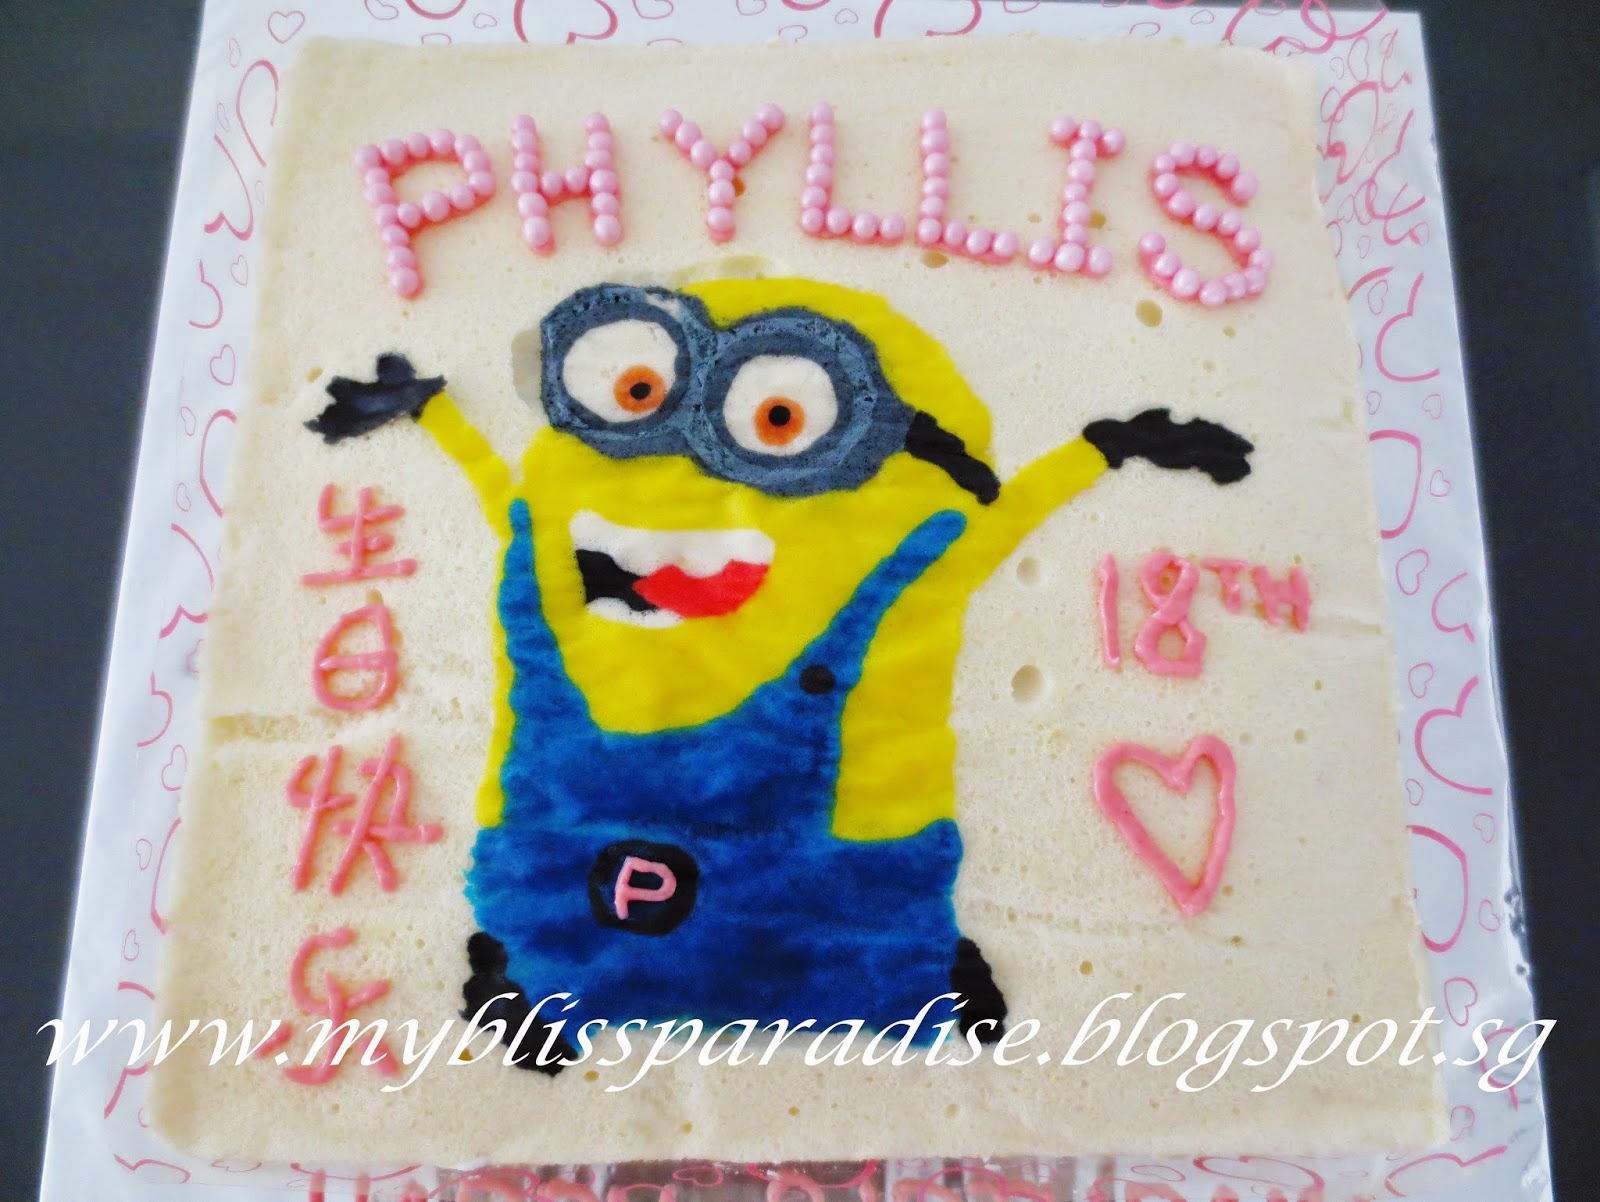 http://myblissparadise.blogspot.sg/2015/02/minion-strawberry-cake-baked-by-my.html